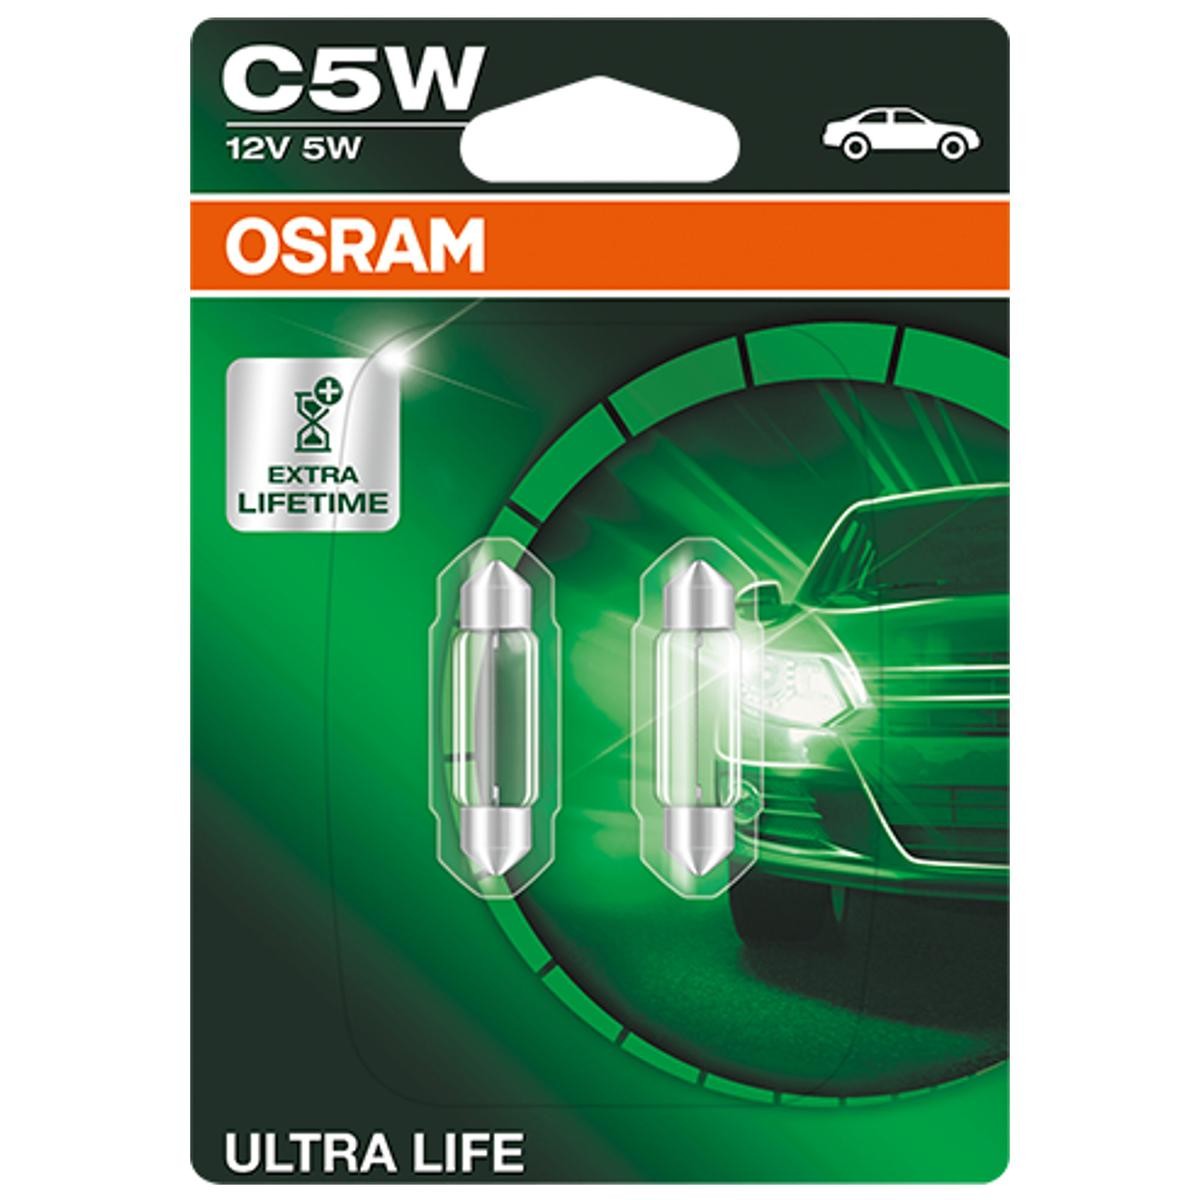 OSRAM ULTRA LIFE 6418ULT-02B Number plate light